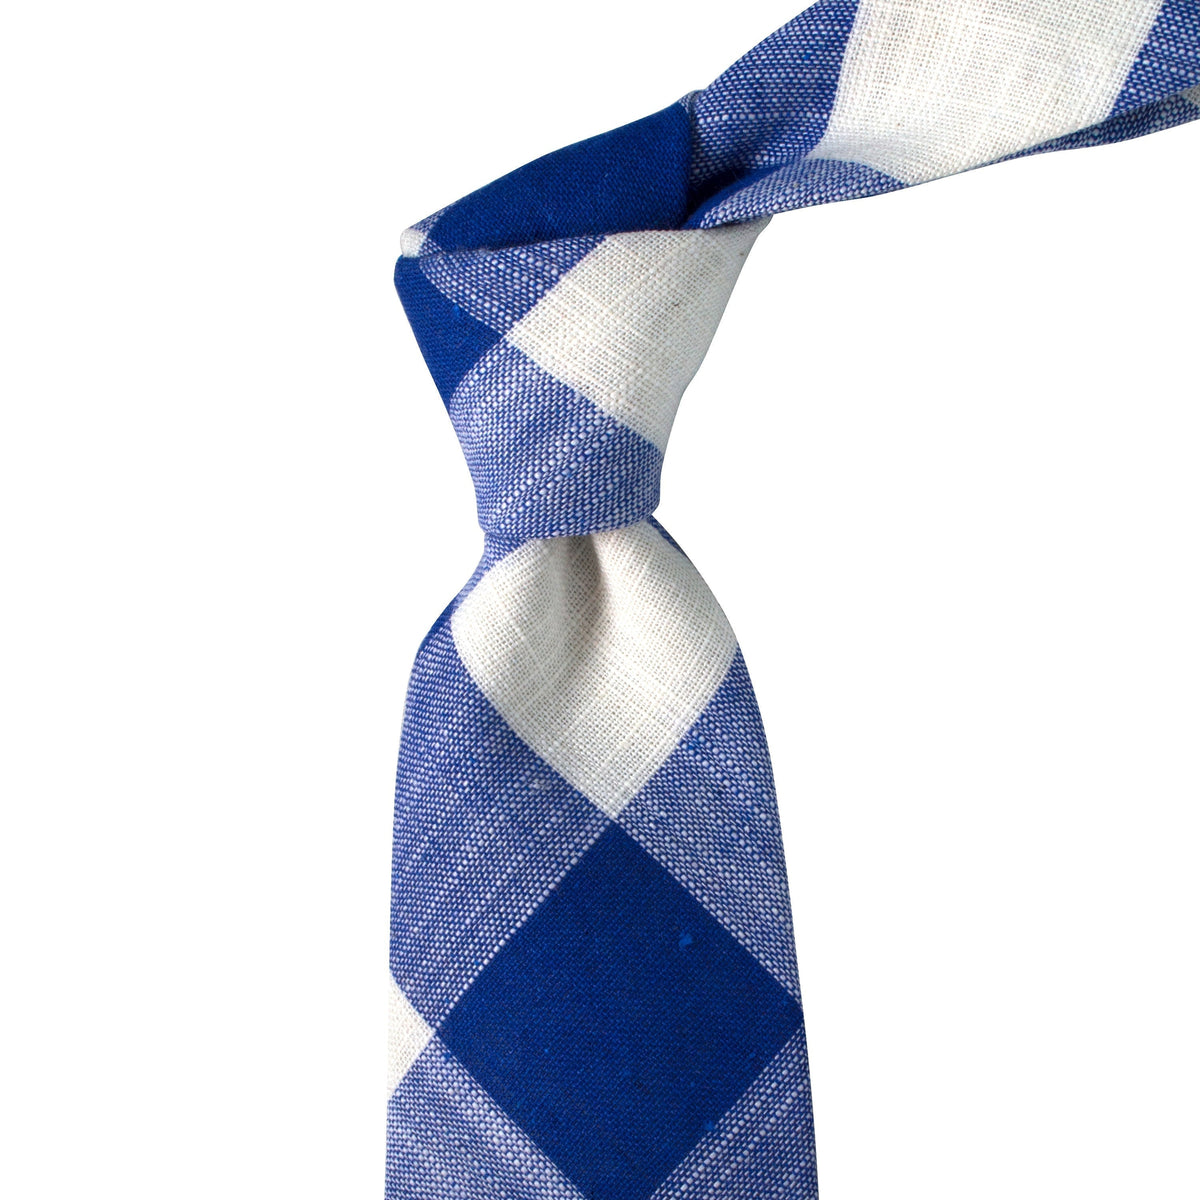 MarZthomson 8cm Wide Plaid Cotton Tie in Blue and White-Cufflinks.com.sg | Neckties.com.sg